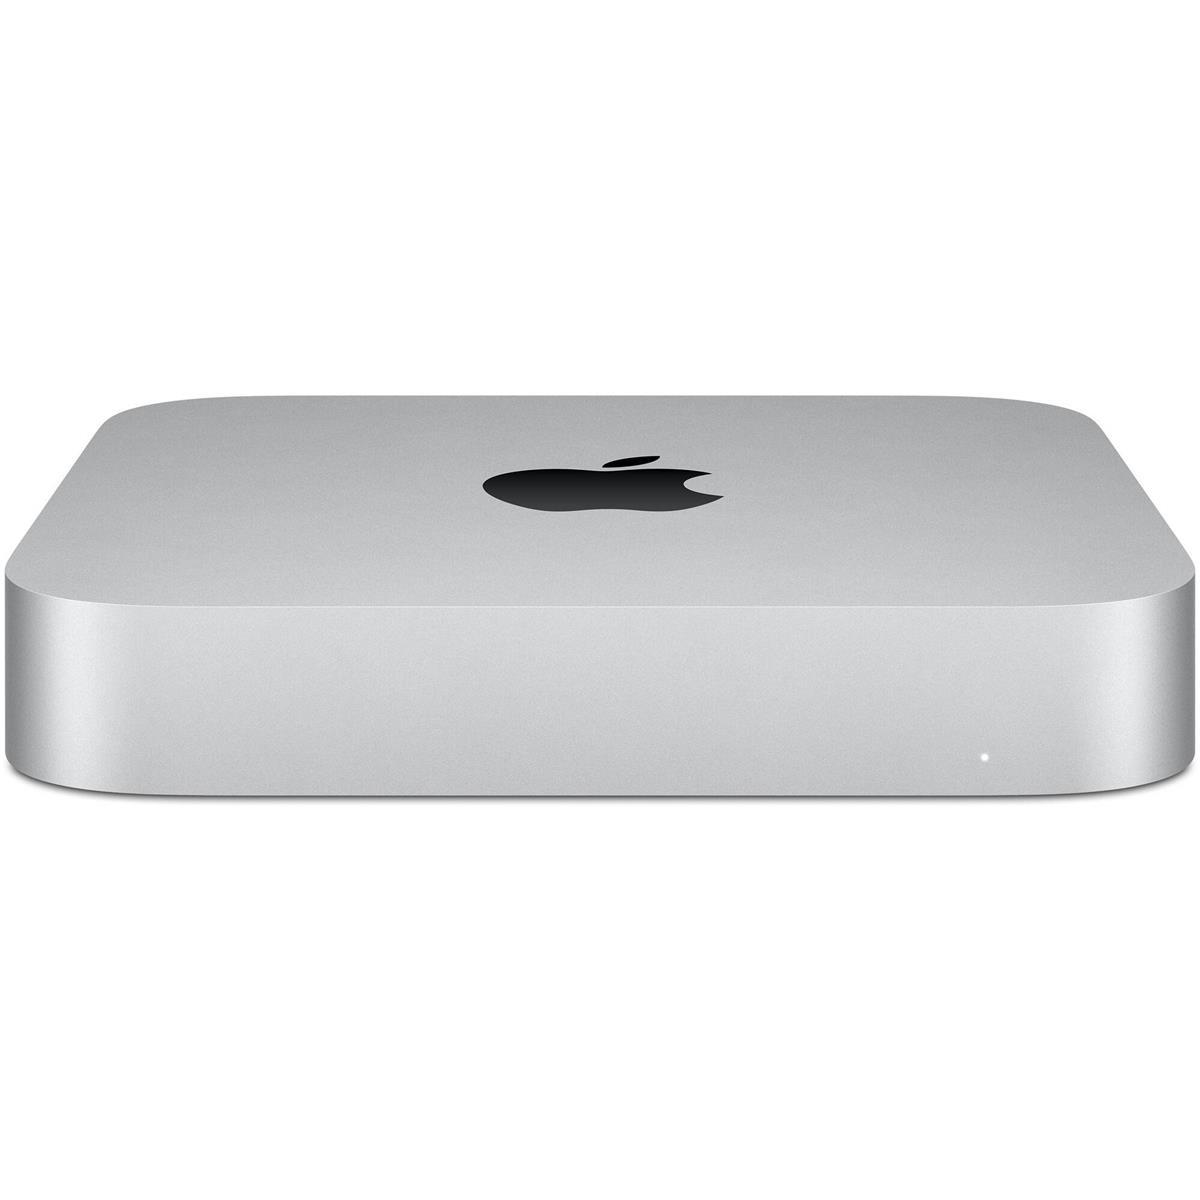 Apple BTO M1 16GB 256GB Mac Mini Desktop Computer for $749 Shipped